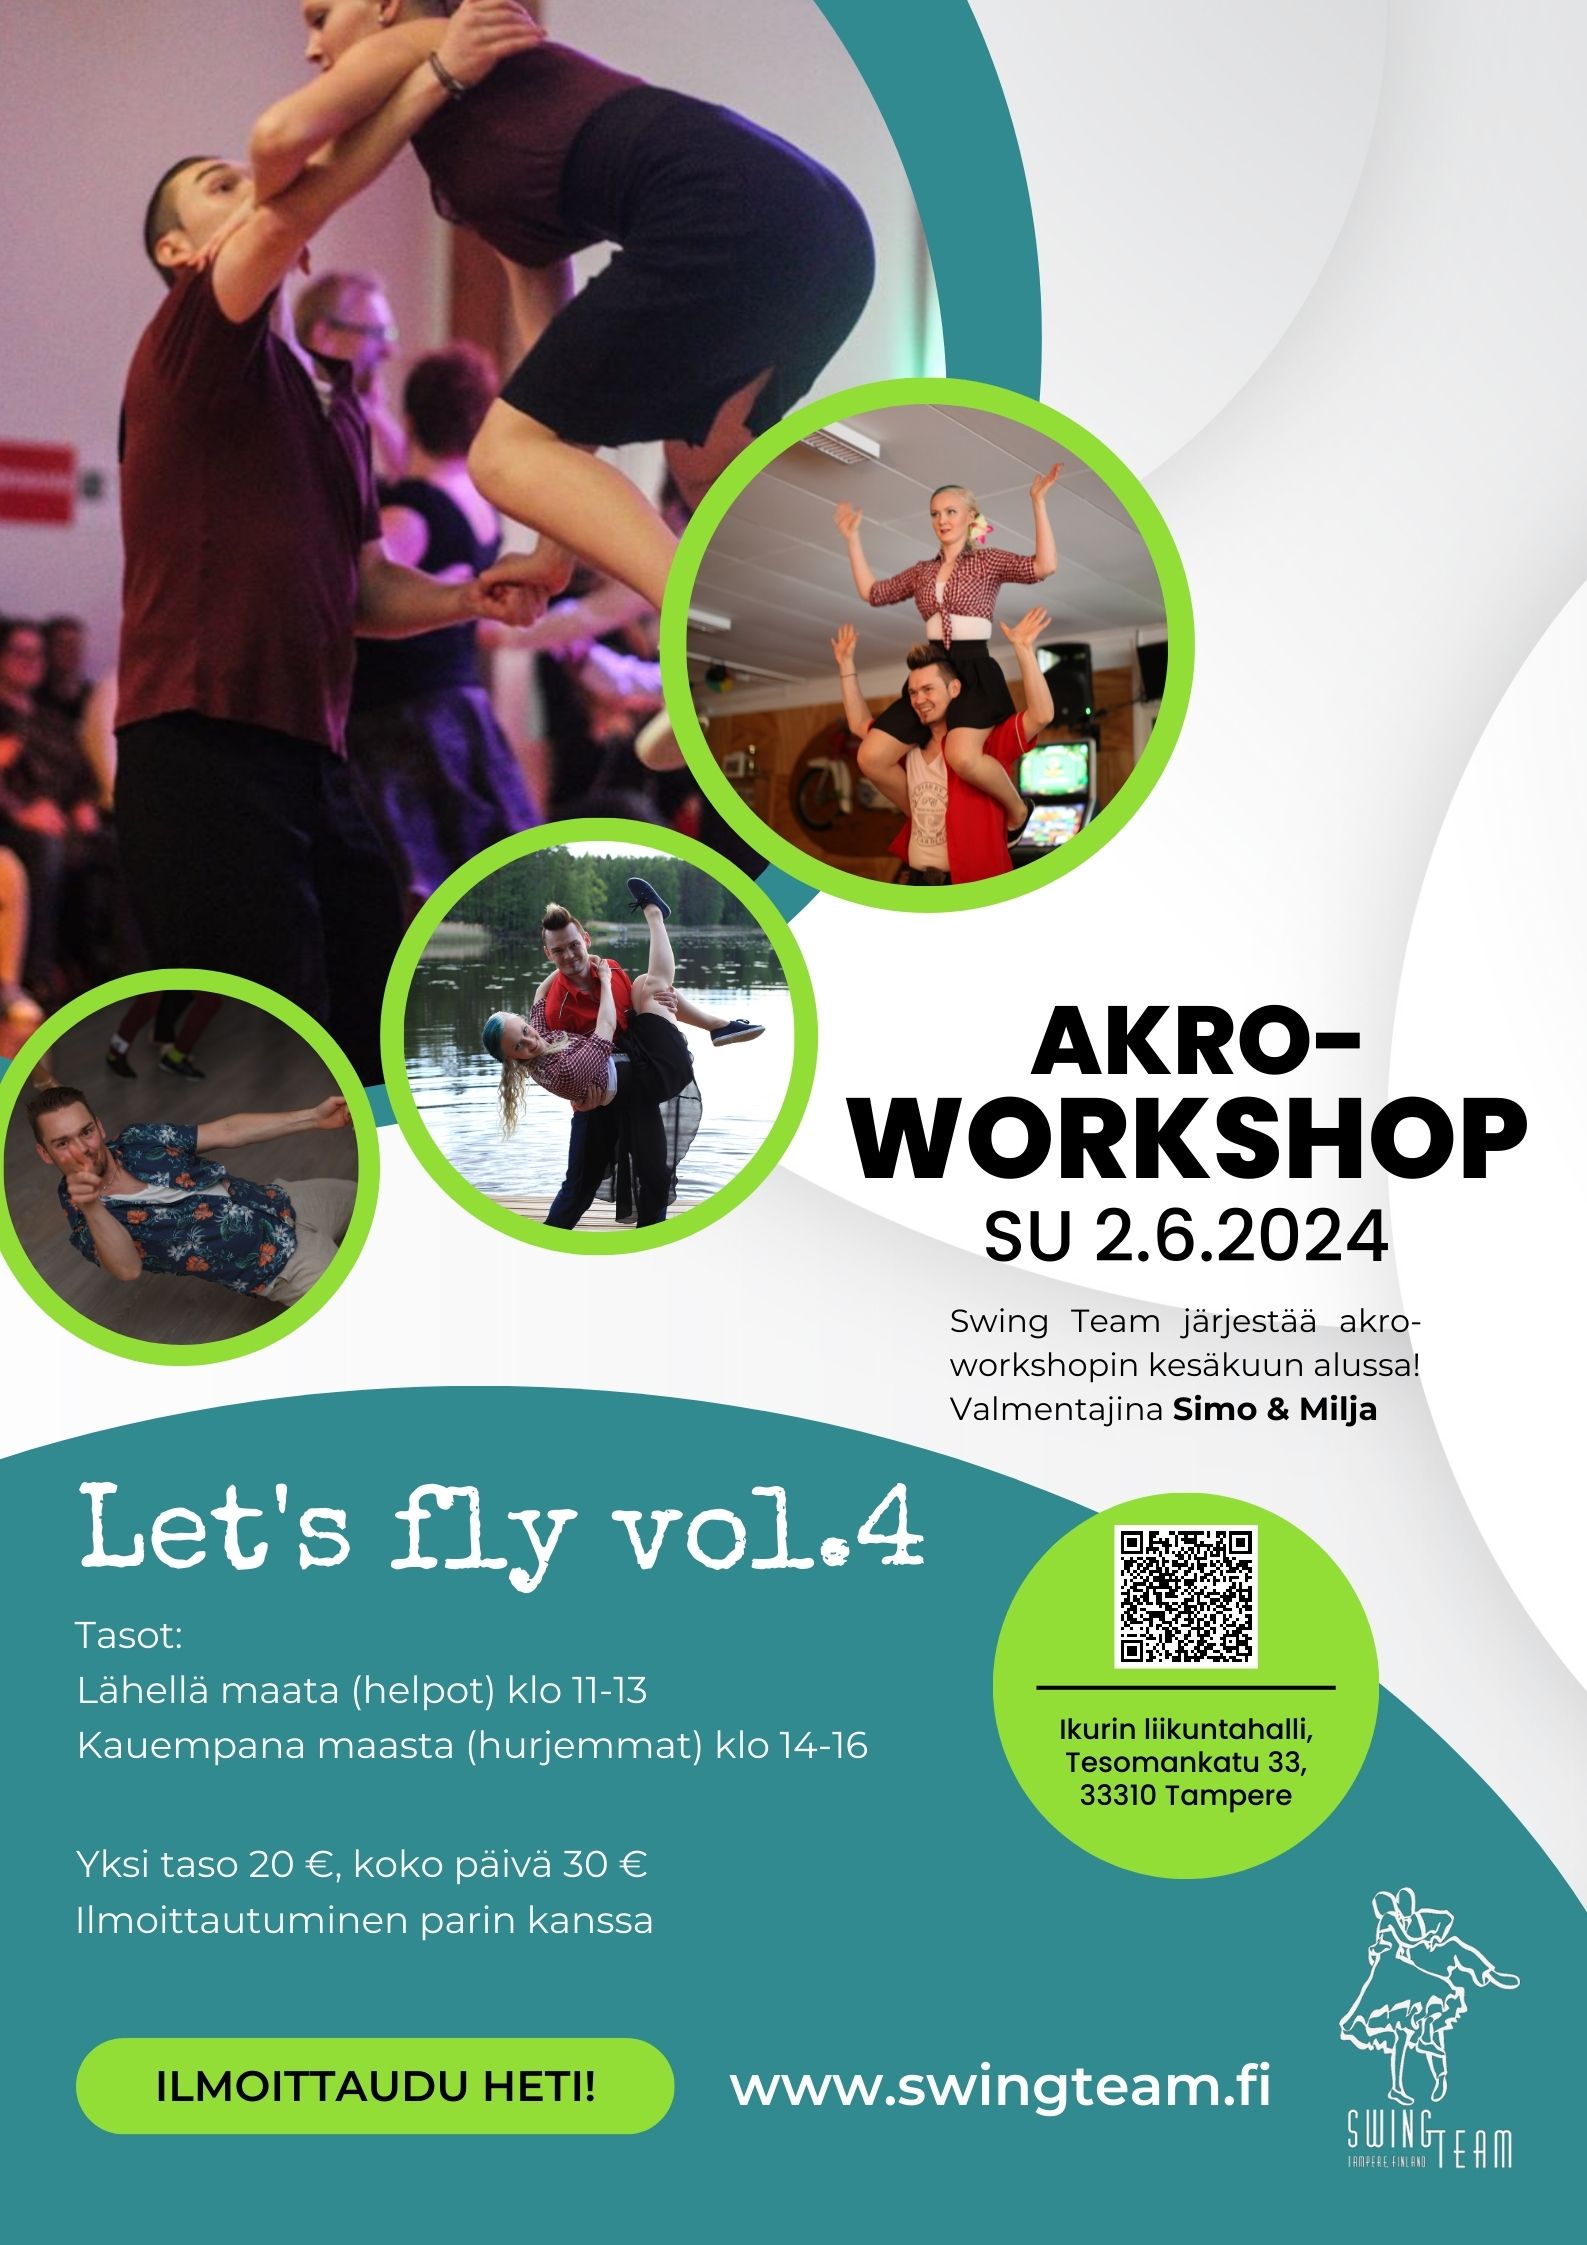 Let's fly vol.4 Akro-workshop 2.6.2024